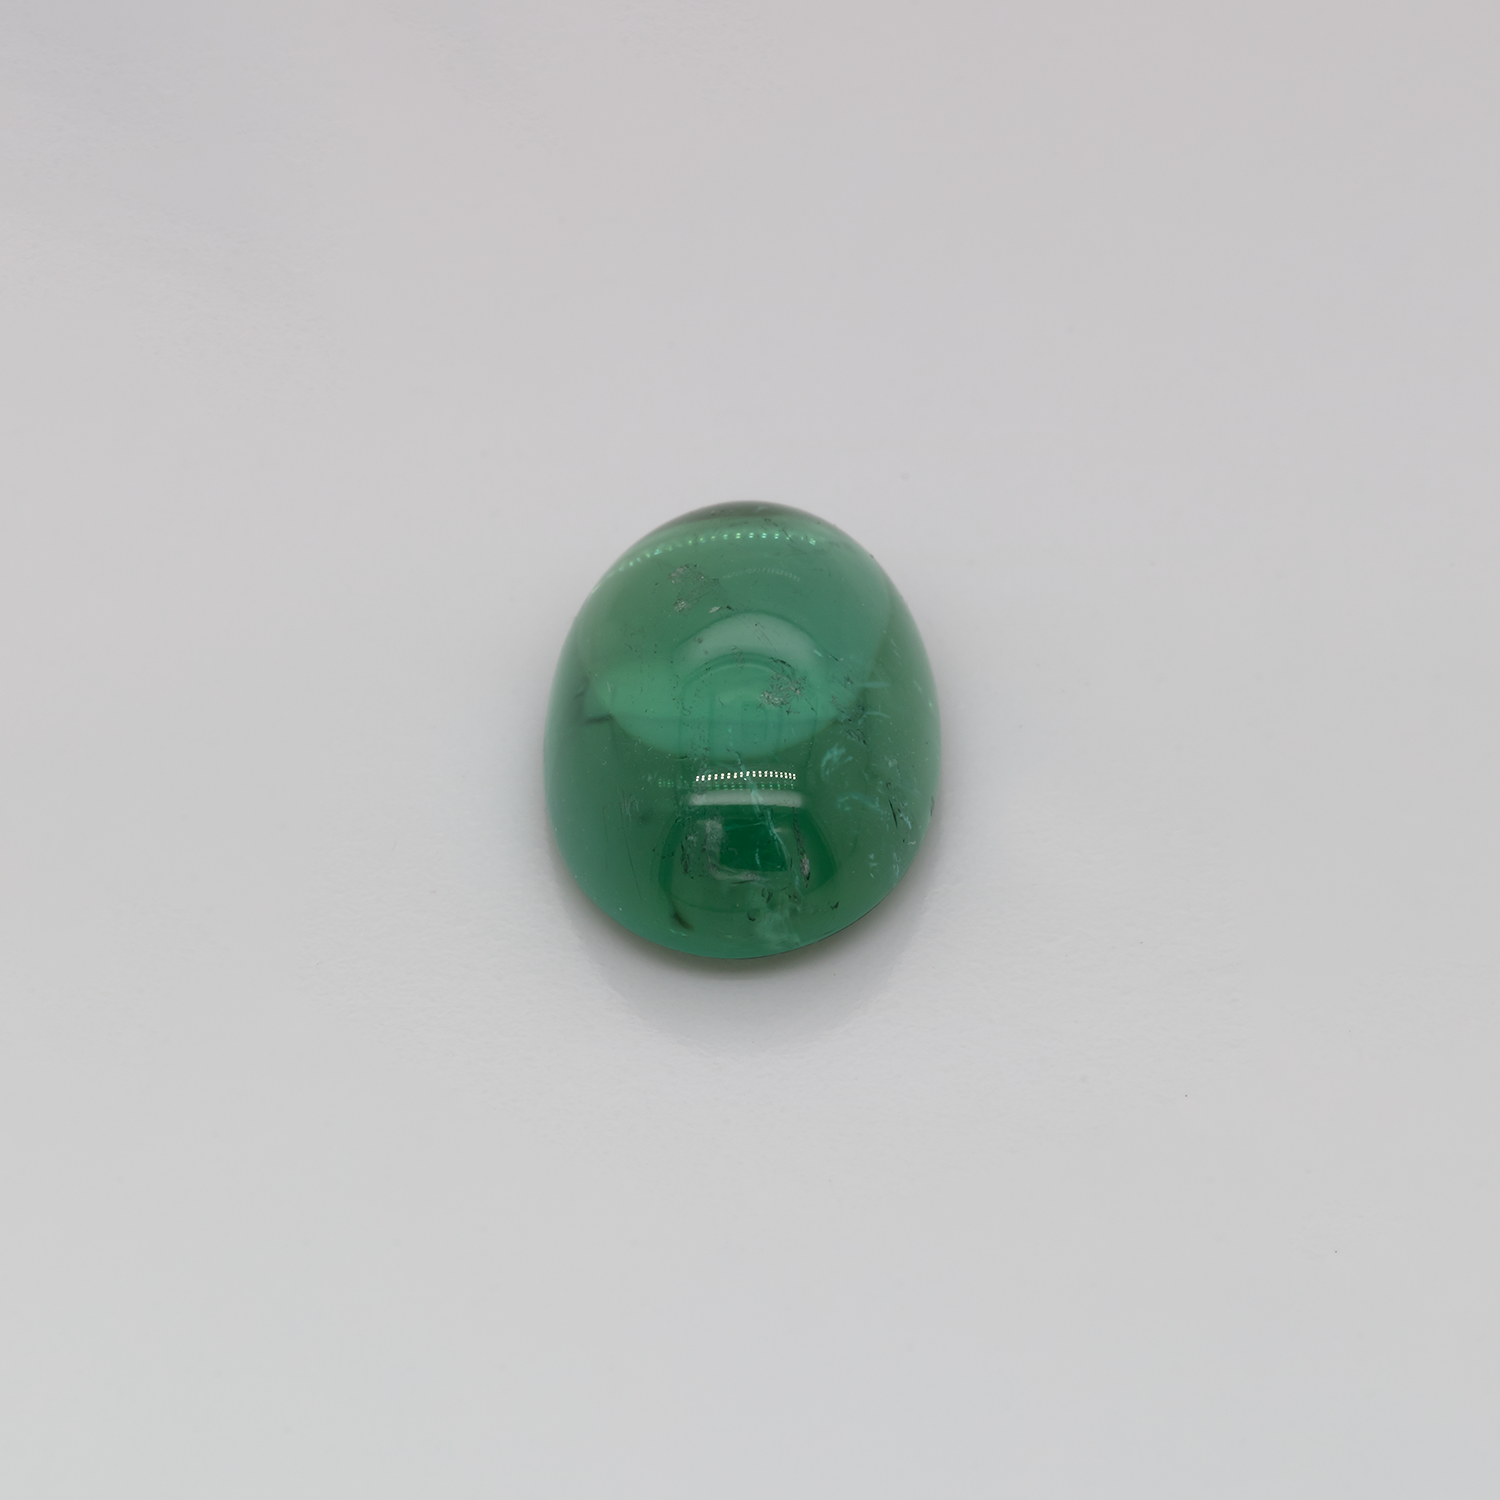 Turmalin - grün & blau, oval, 16.5x11.3 mm, 10.15 cts, Nr. TR991032